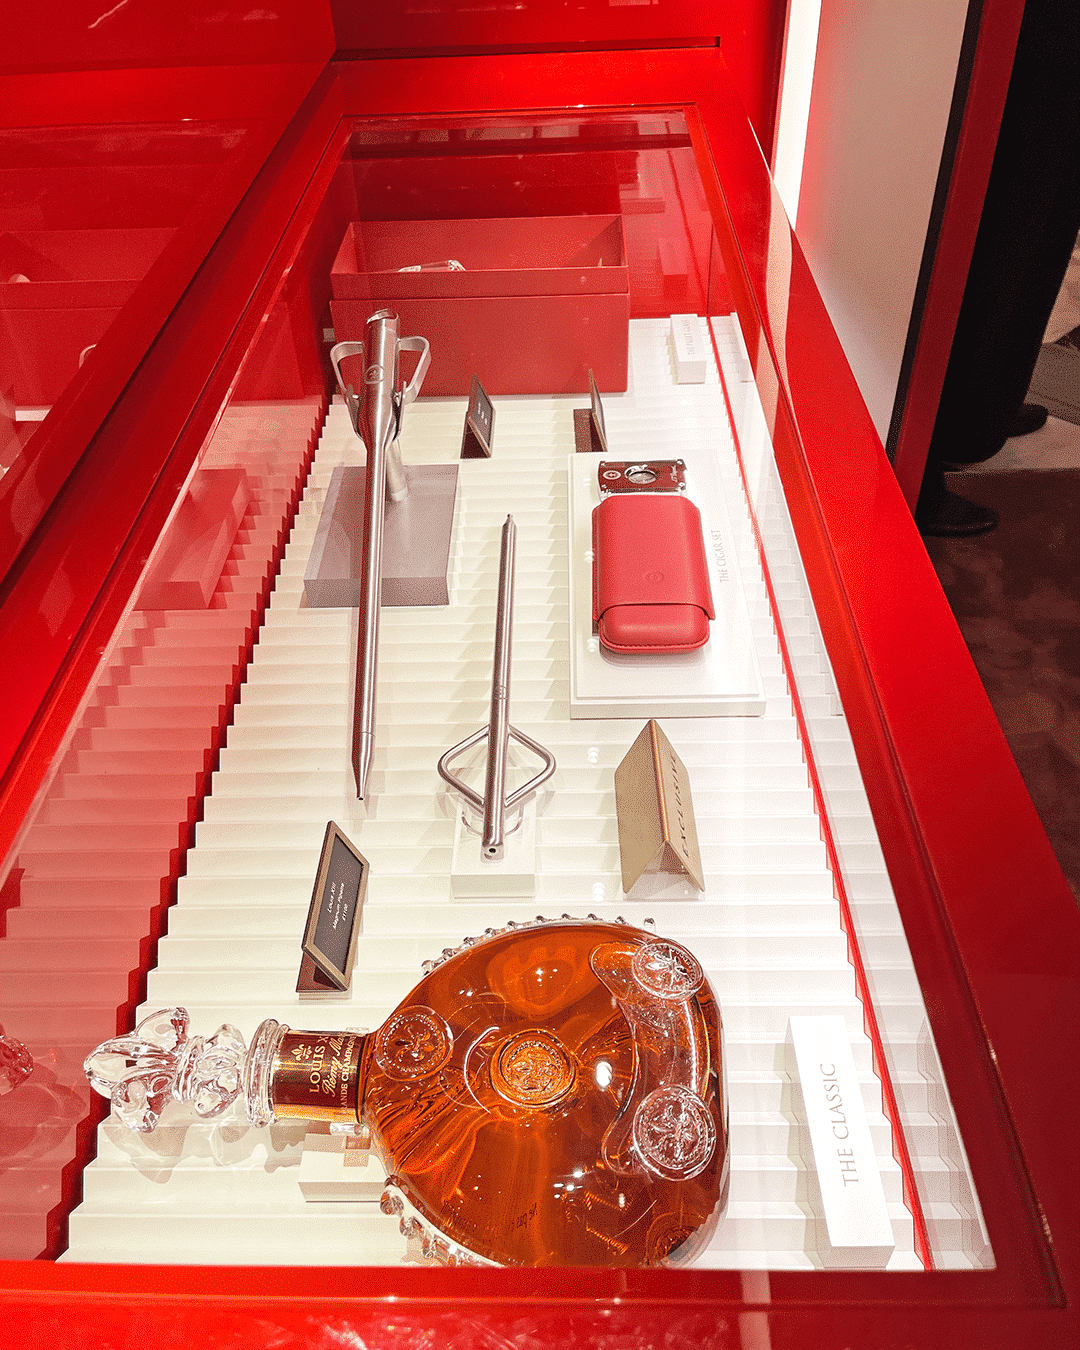 elegant product presentation Shopfitting for Louis XIII in Londoner Harrods